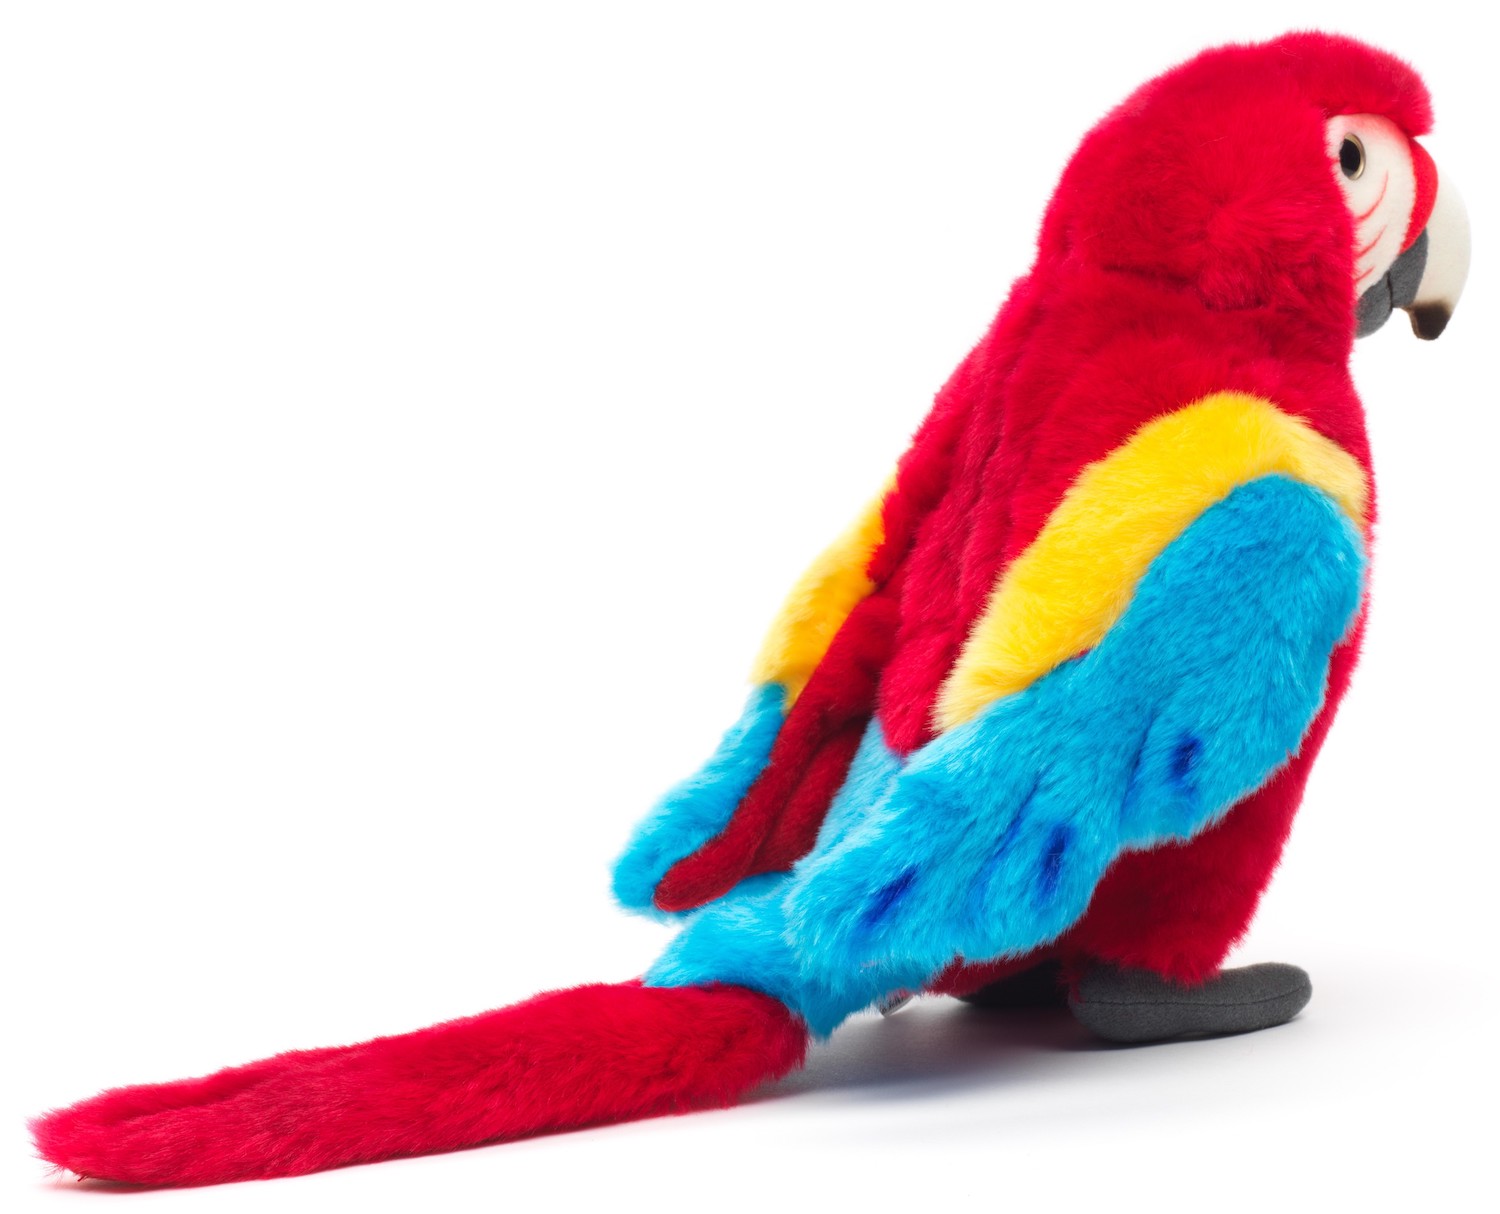  Parrot - 28 cm (height)